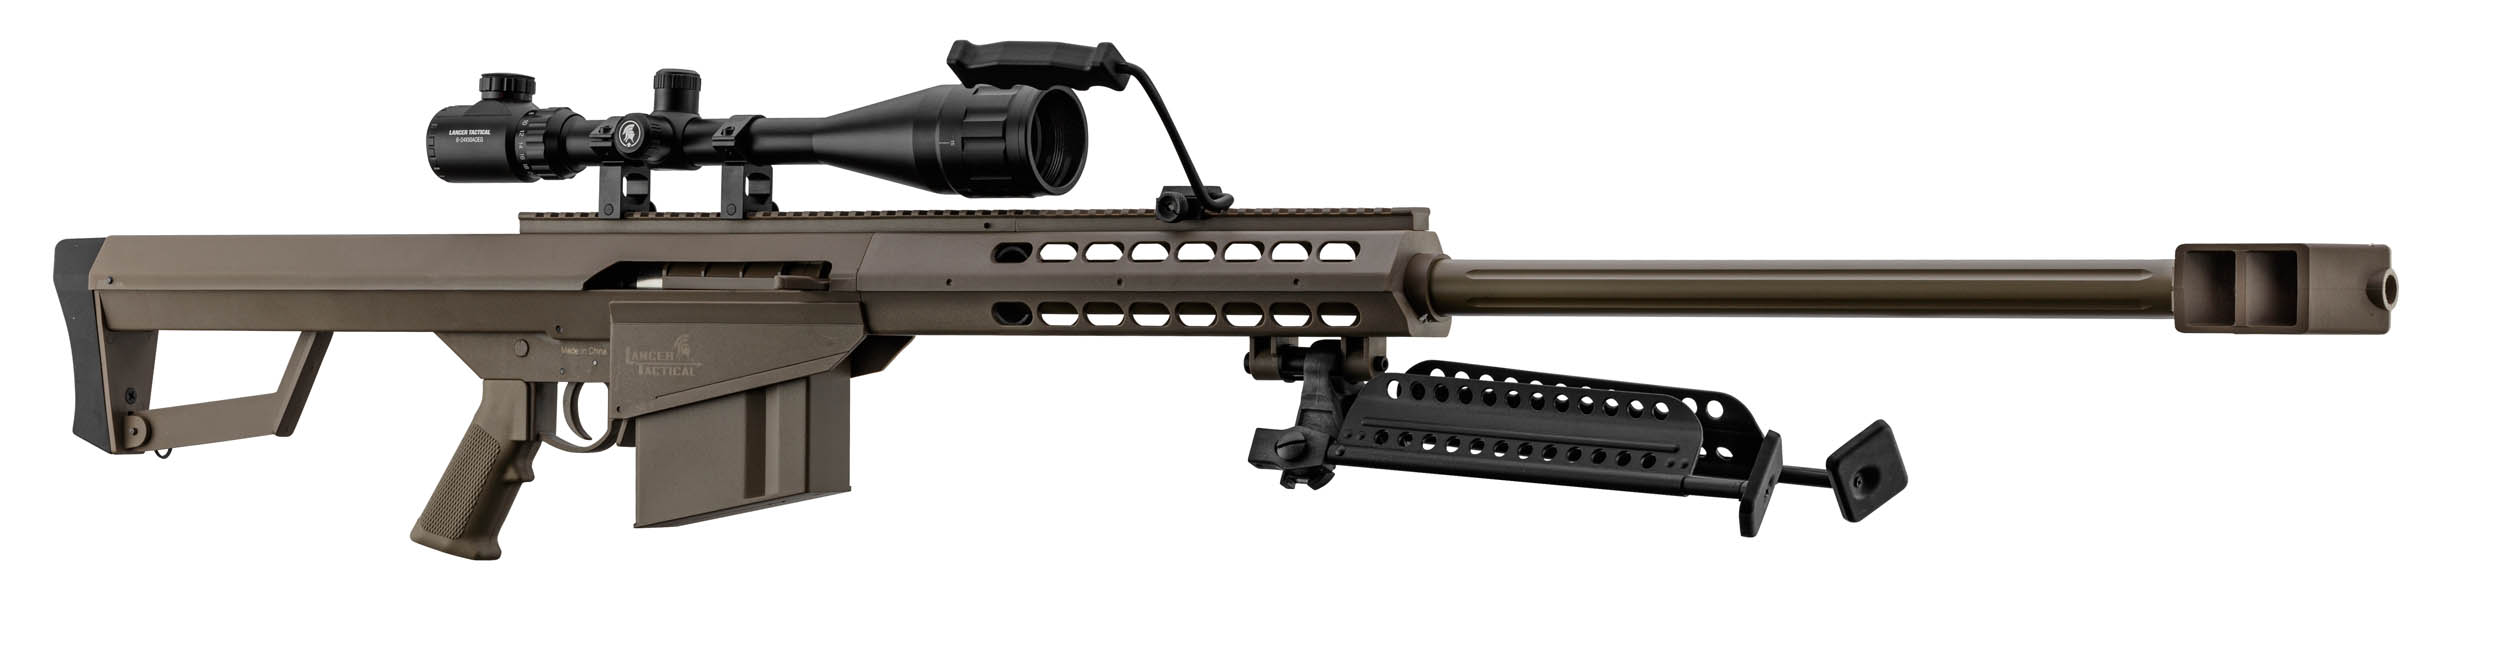 PCKLR3052-04 Pack Sniper LT-20 tan M82 1,5J + lunette + bi-pied + poignée